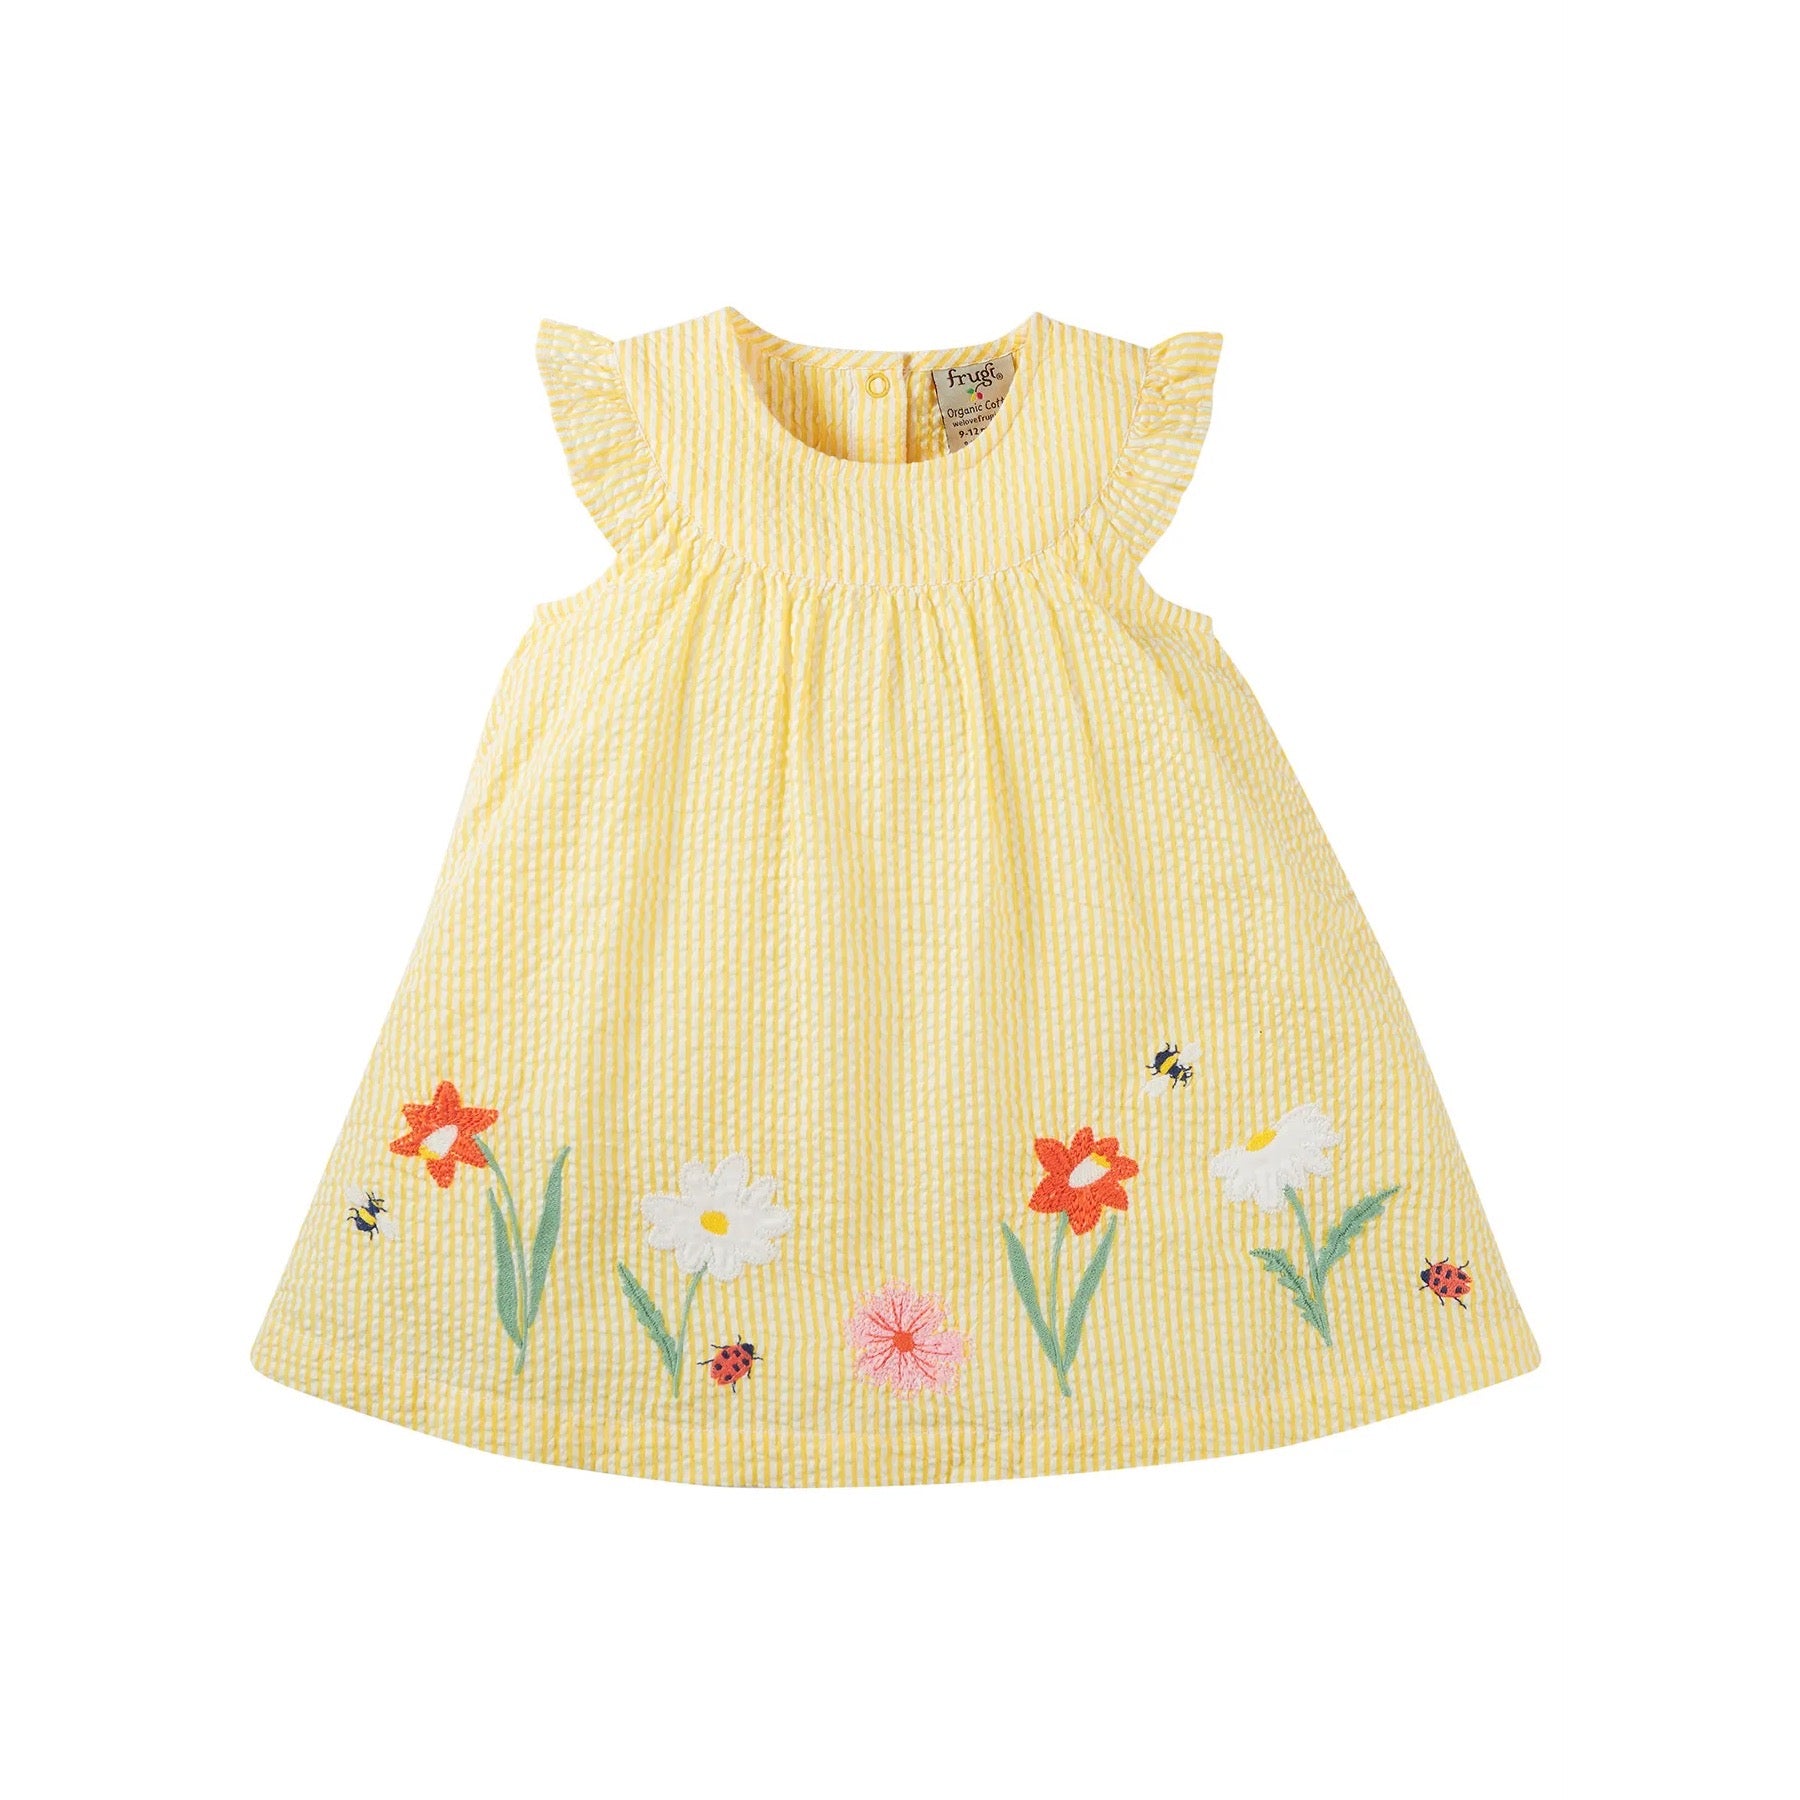 Frugi Devon Body Dress Pk3bi Flowers Clothing 0-3M / Yellow,3-6M / Yellow,6-9M / Yellow,9-12M / Yellow,12-18M / Yellow